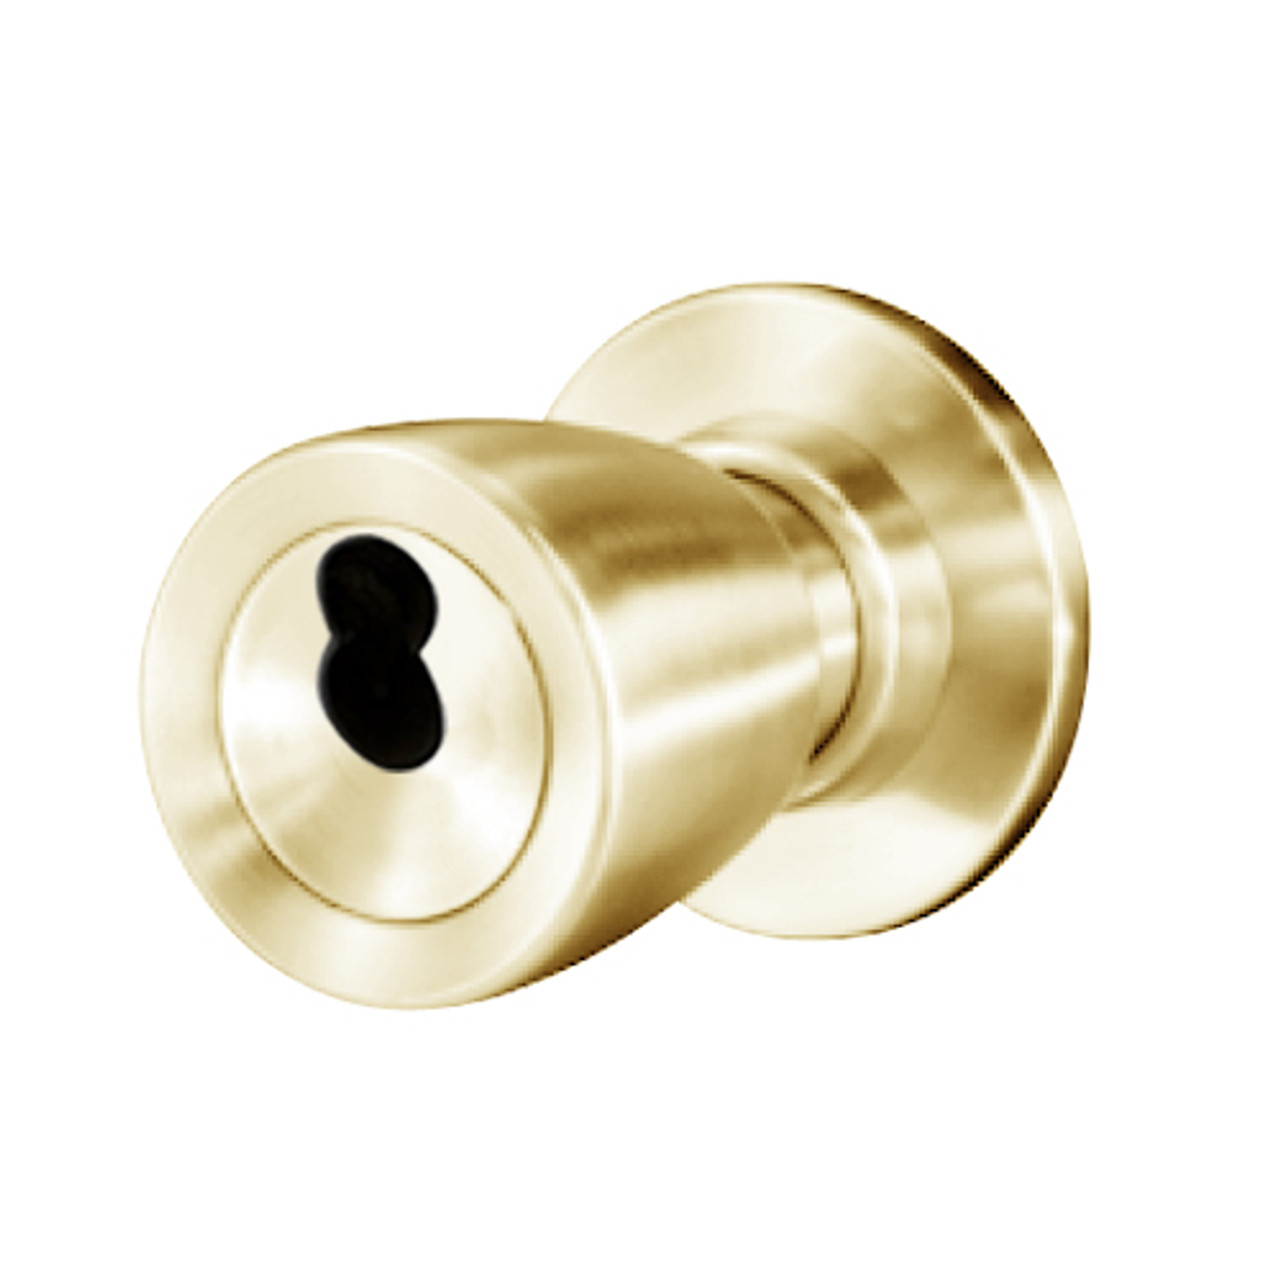 8K47YR6CS3606 Best 8K Series Exit Heavy Duty Cylindrical Knob Locks with Tulip Style in Satin Brass